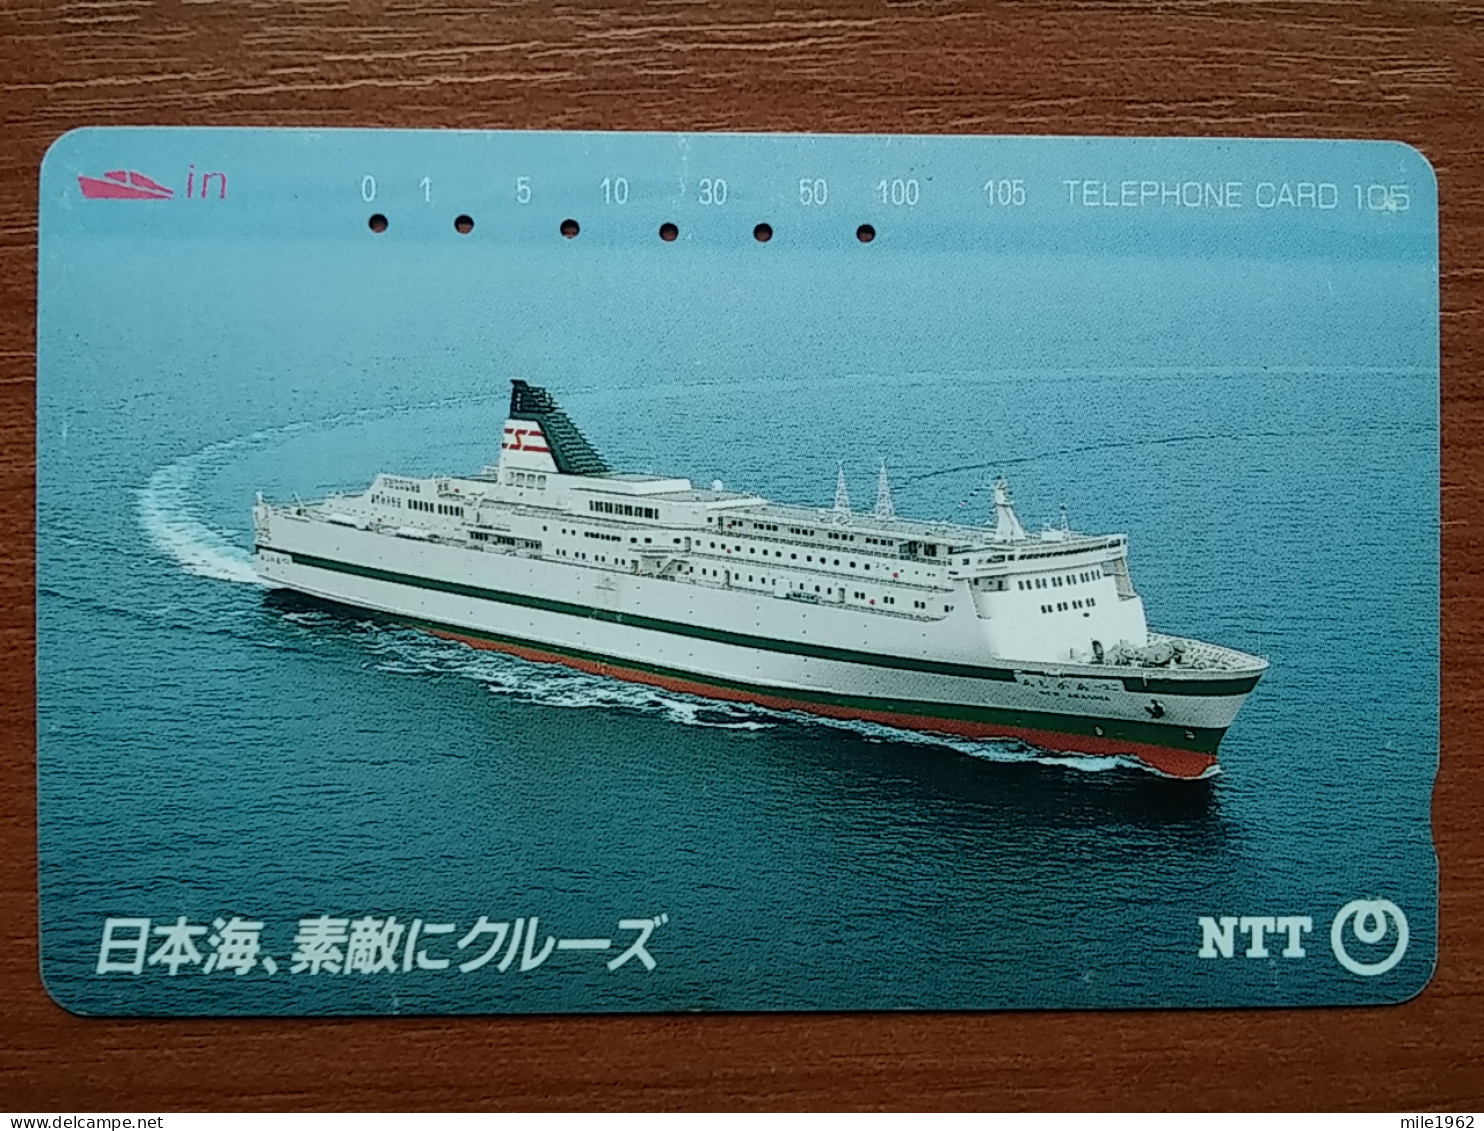 T-357 - JAPAN, Japon, Nipon, TELECARD, PHONECARD,  NTT 330-302, Ship, Navire - Schiffe